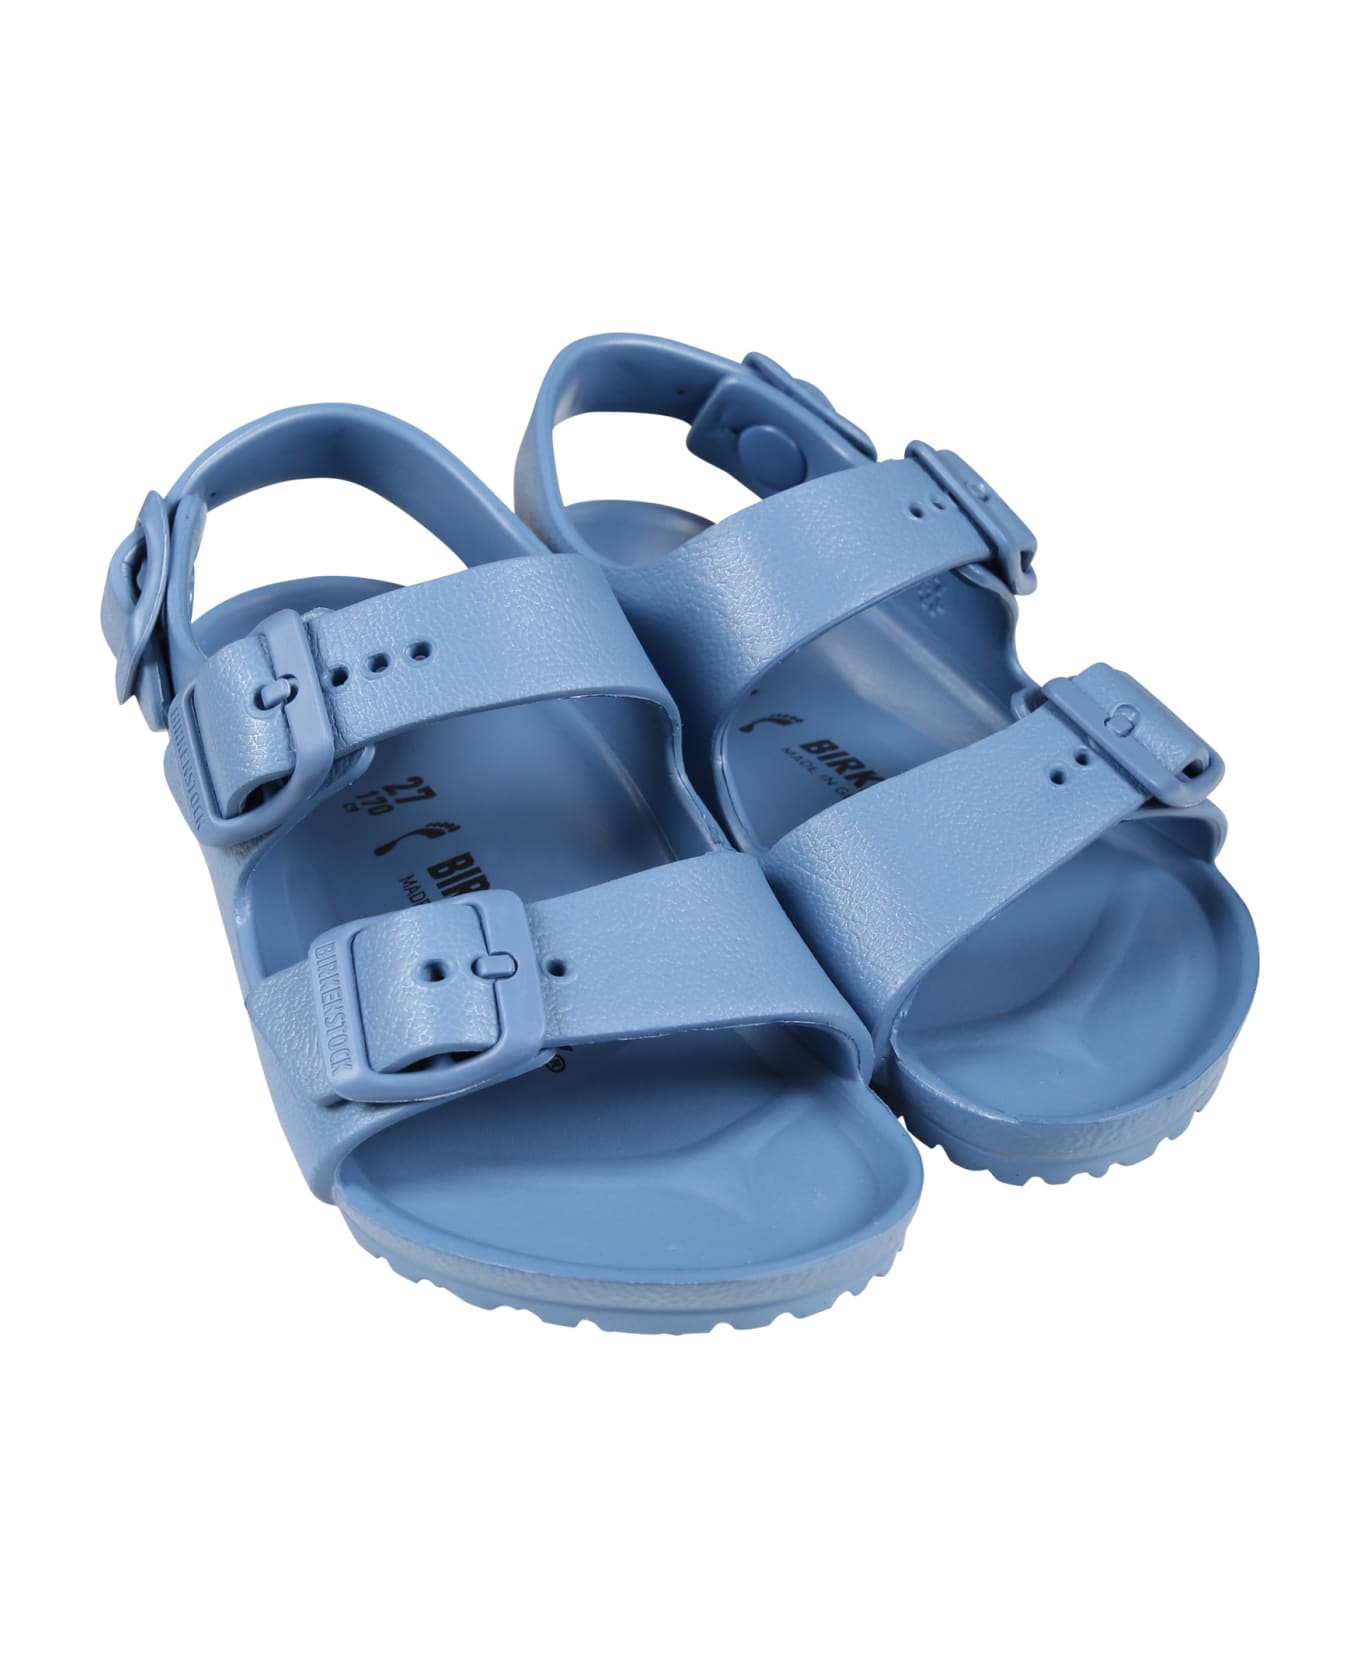 Birkenstock Milano Eva Light Blue Sandals For Kids With Logo - Blue